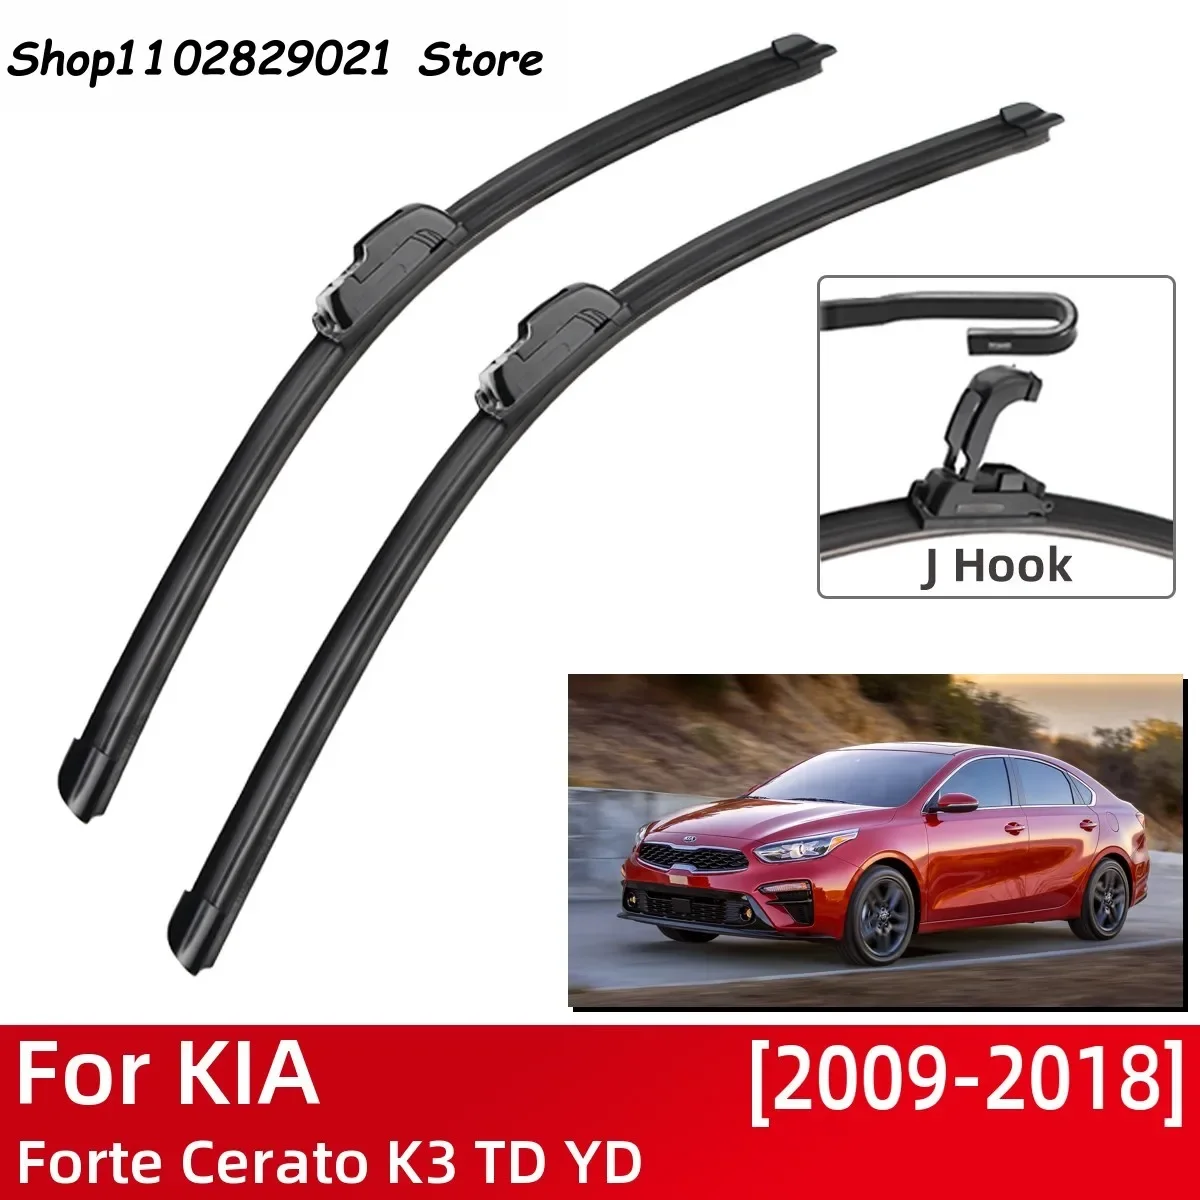 

For KIA Forte Cerato K3 TD YD 2009-2018 Car Accessories Front Windscreen Wiper Blade Brushes U Type J Hooks 2018 2017 2009